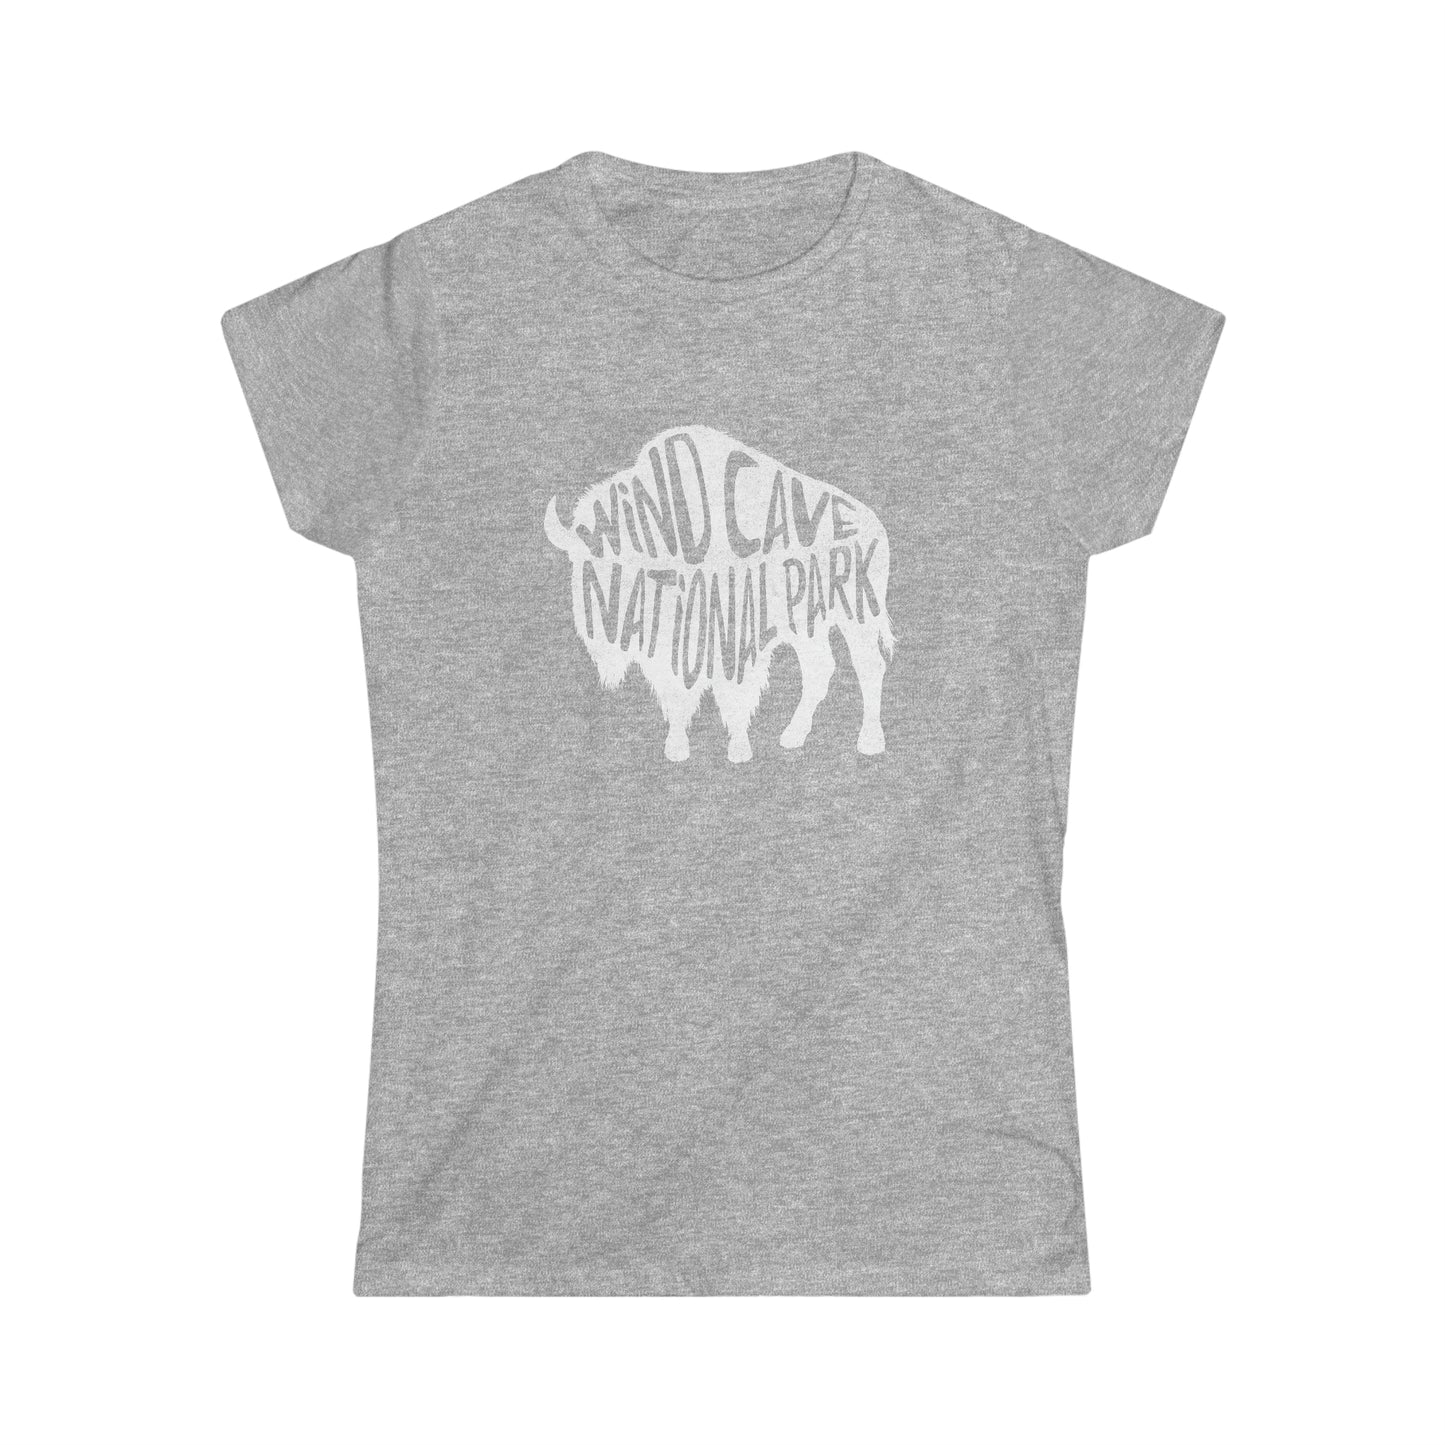 Wind Cave National Park Women's T-Shirt - Bison